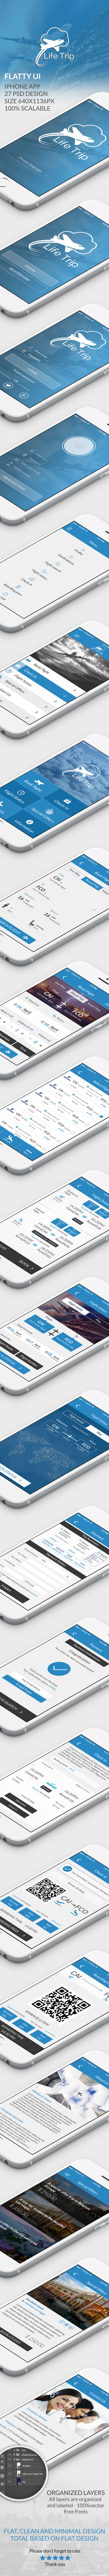 ui kit android Plan blue transportation app ios iphone Travel